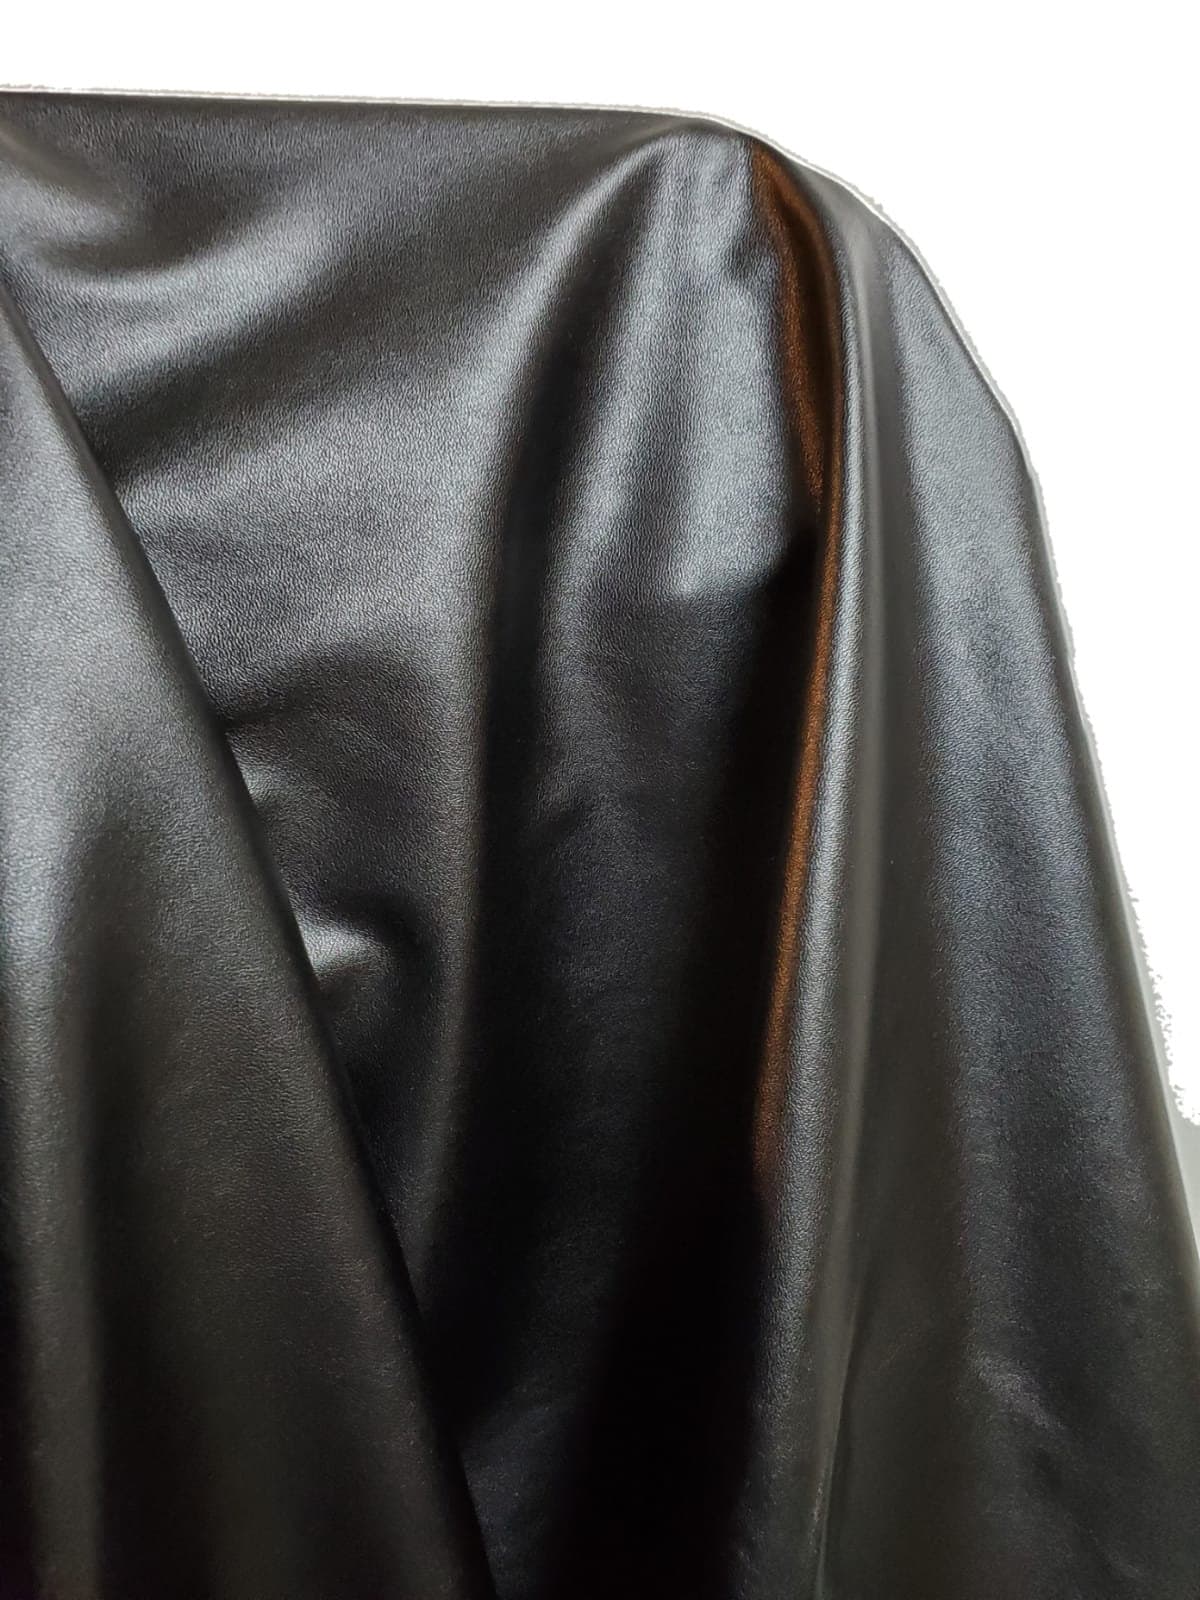 Black Leatherette Braided Bolo Cord 3.6mm (1 Yard)